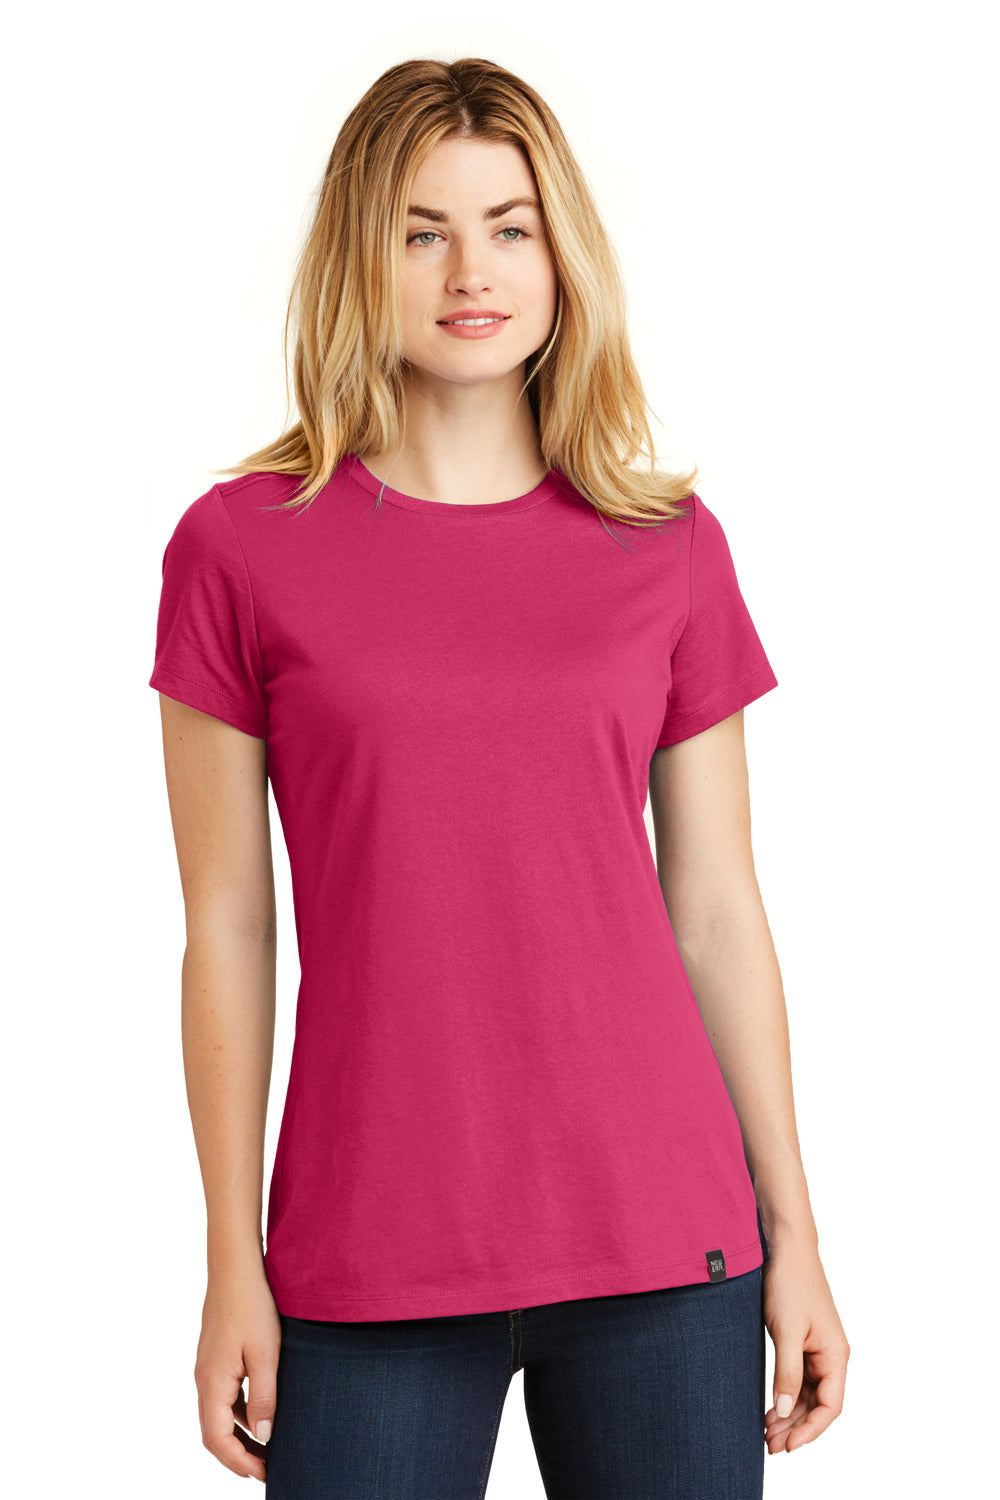 New Era LNEA100 Womens Heritage Short Sleeve Crewneck T-Shirt Deep Pink Front